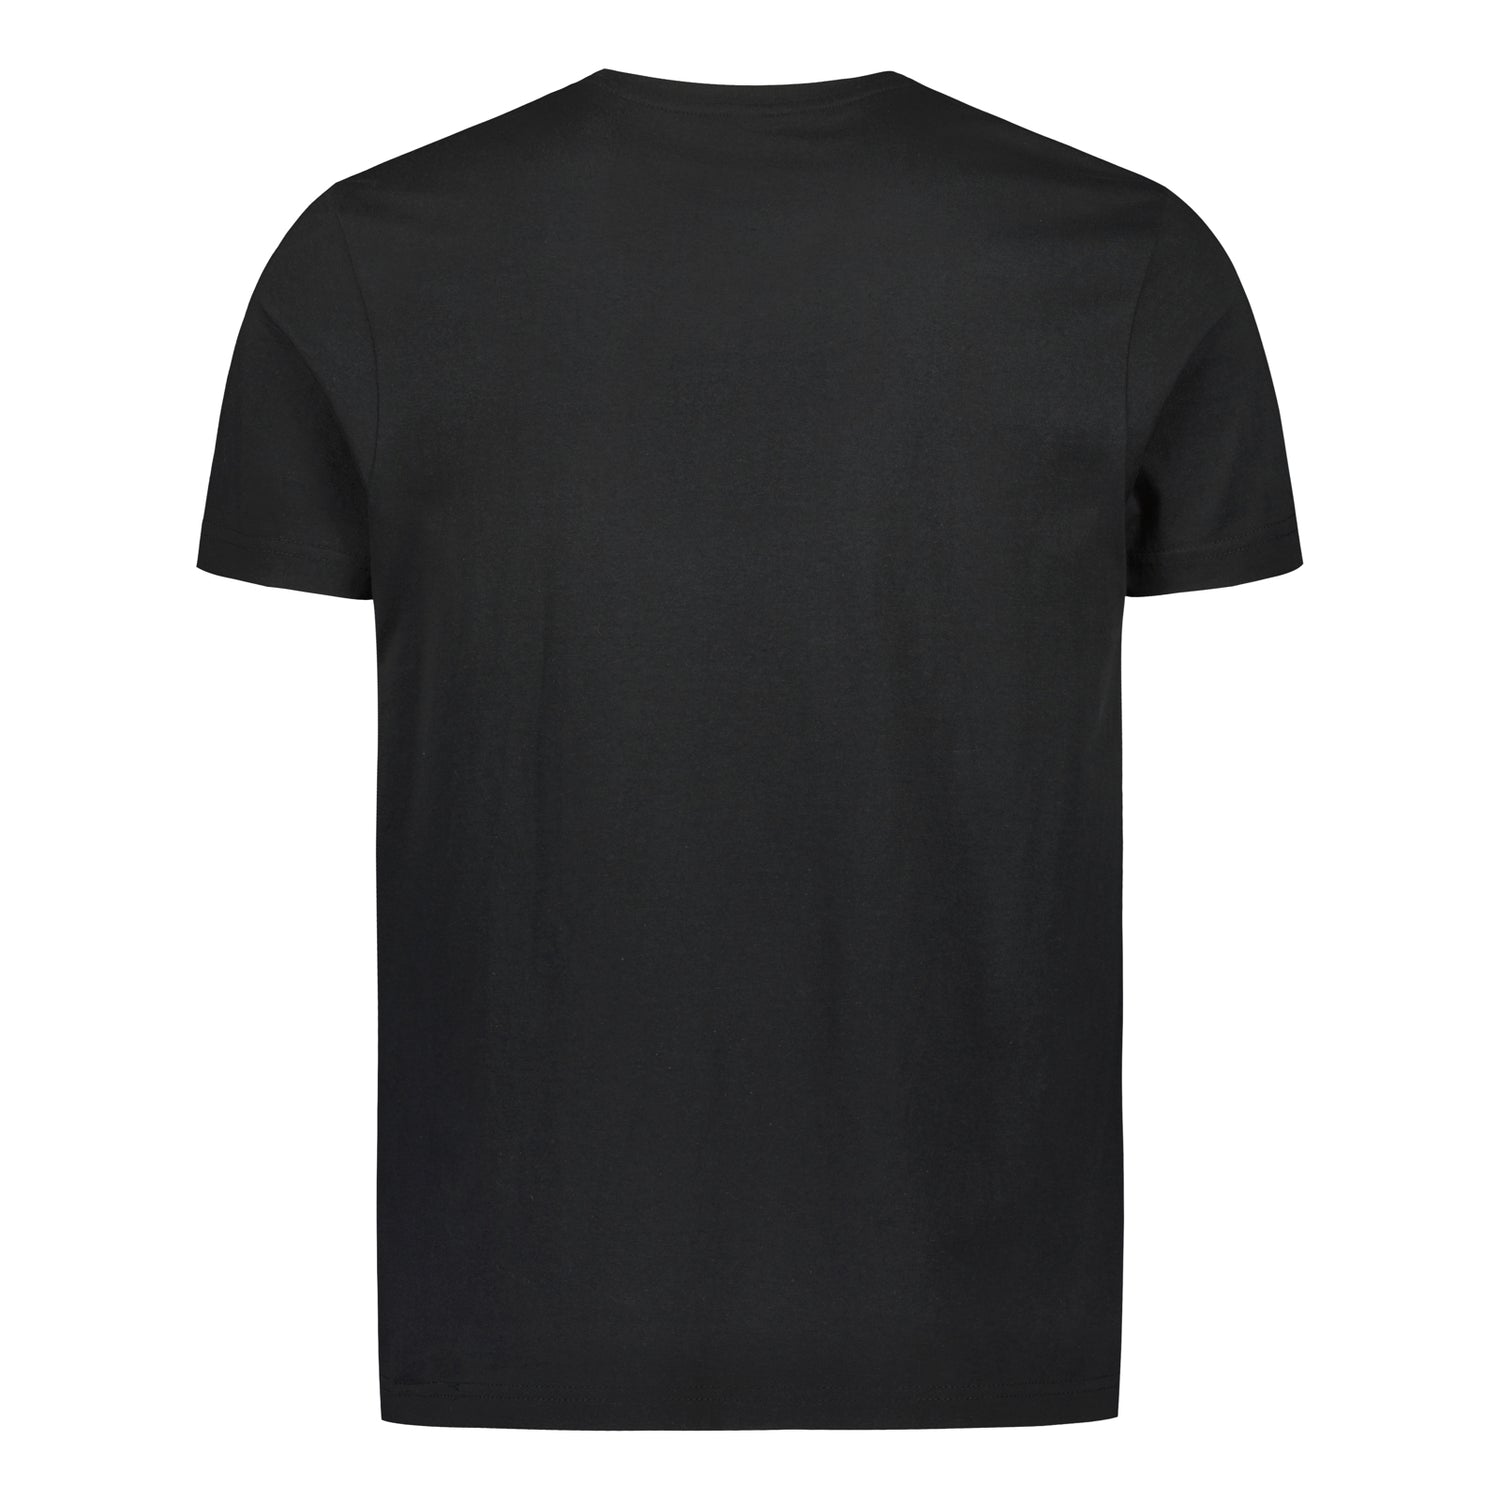 Oi Suomi on! Black Edition T-Shirt, Black, Kids